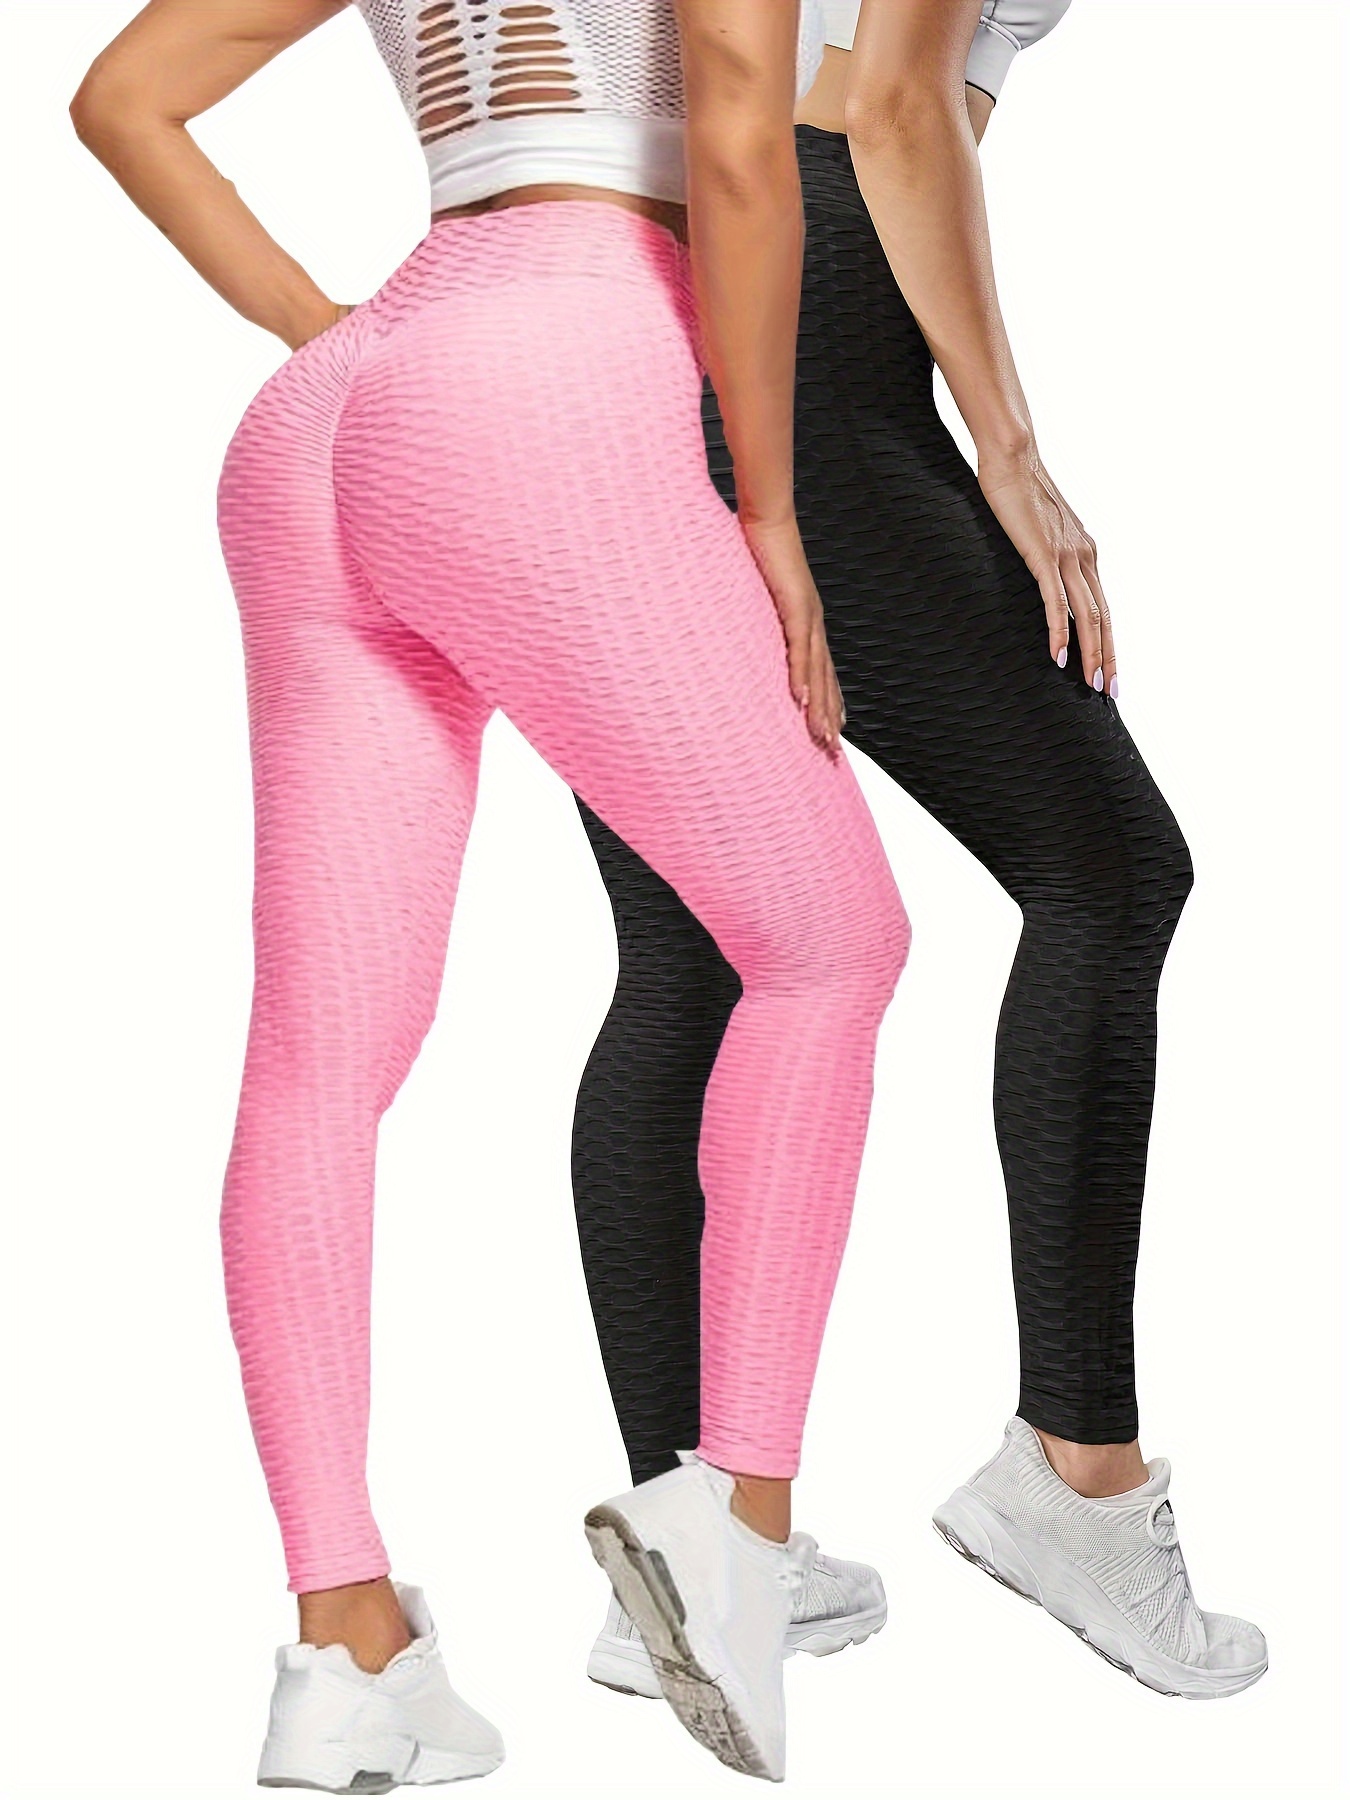 Women's Stirrup Leggings Quick Dry High Waist Push Up Tights Long Yoga Pants  for Sport Fitness Running 